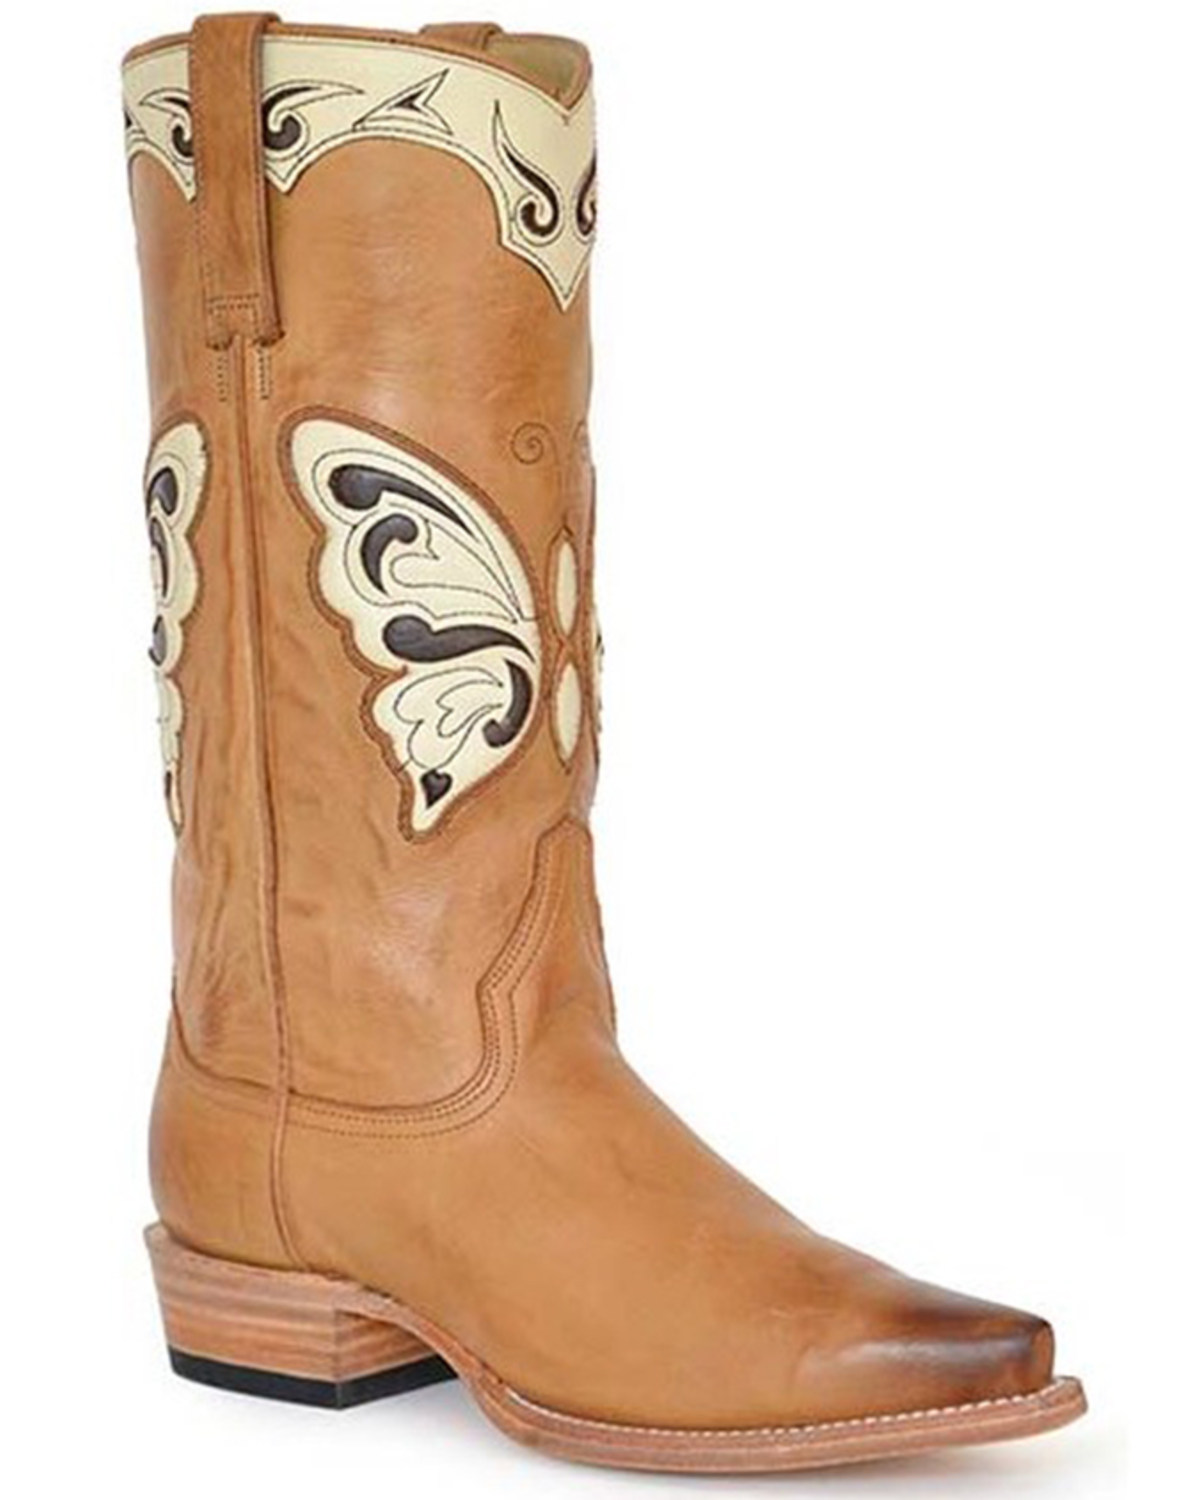 Stetson Women's Mariposa Western Boots - Snip Toe